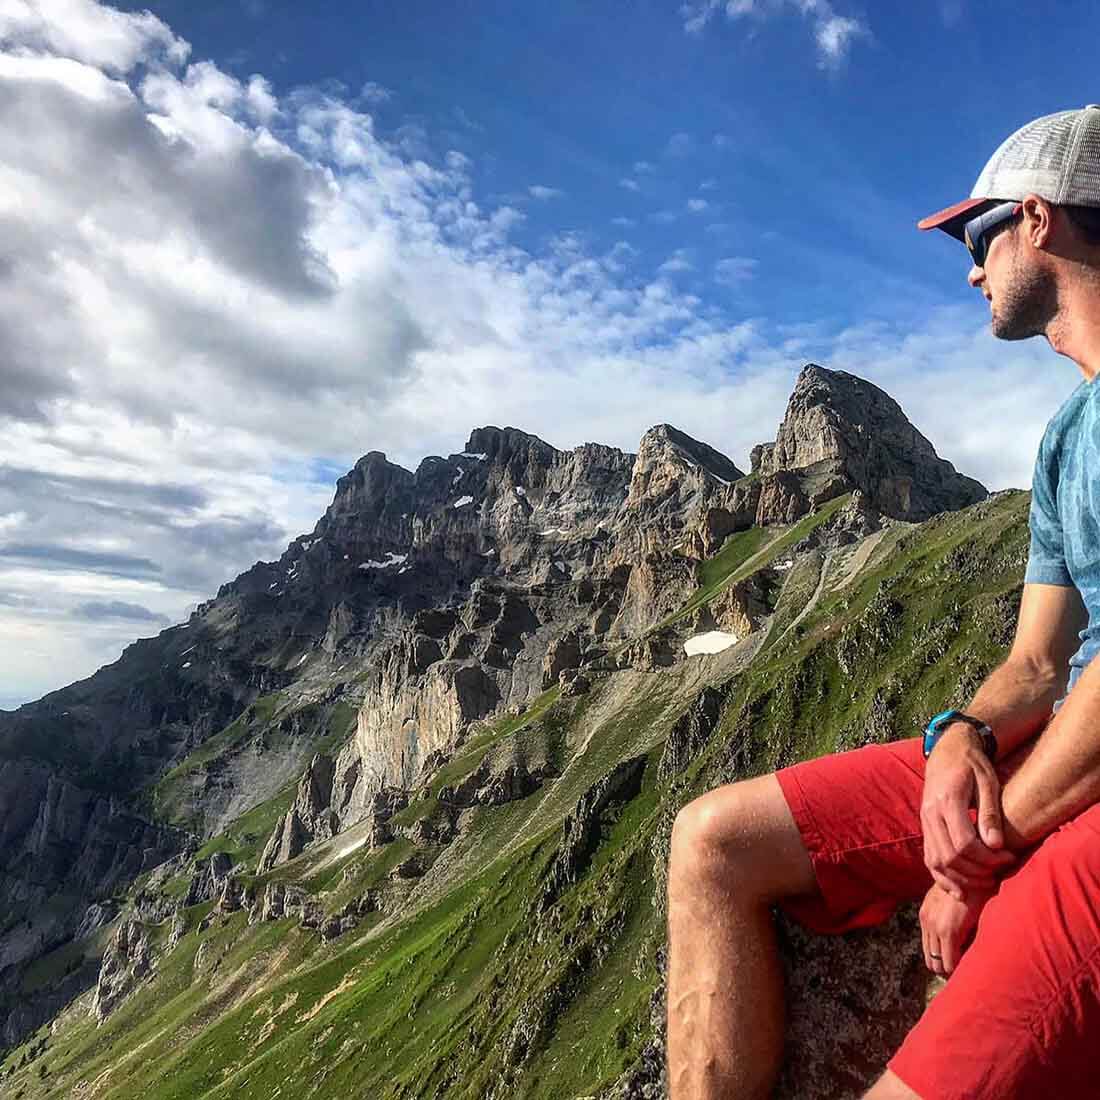 HOKA fan and Run the Wild founder Simon James looks out onto the mountain